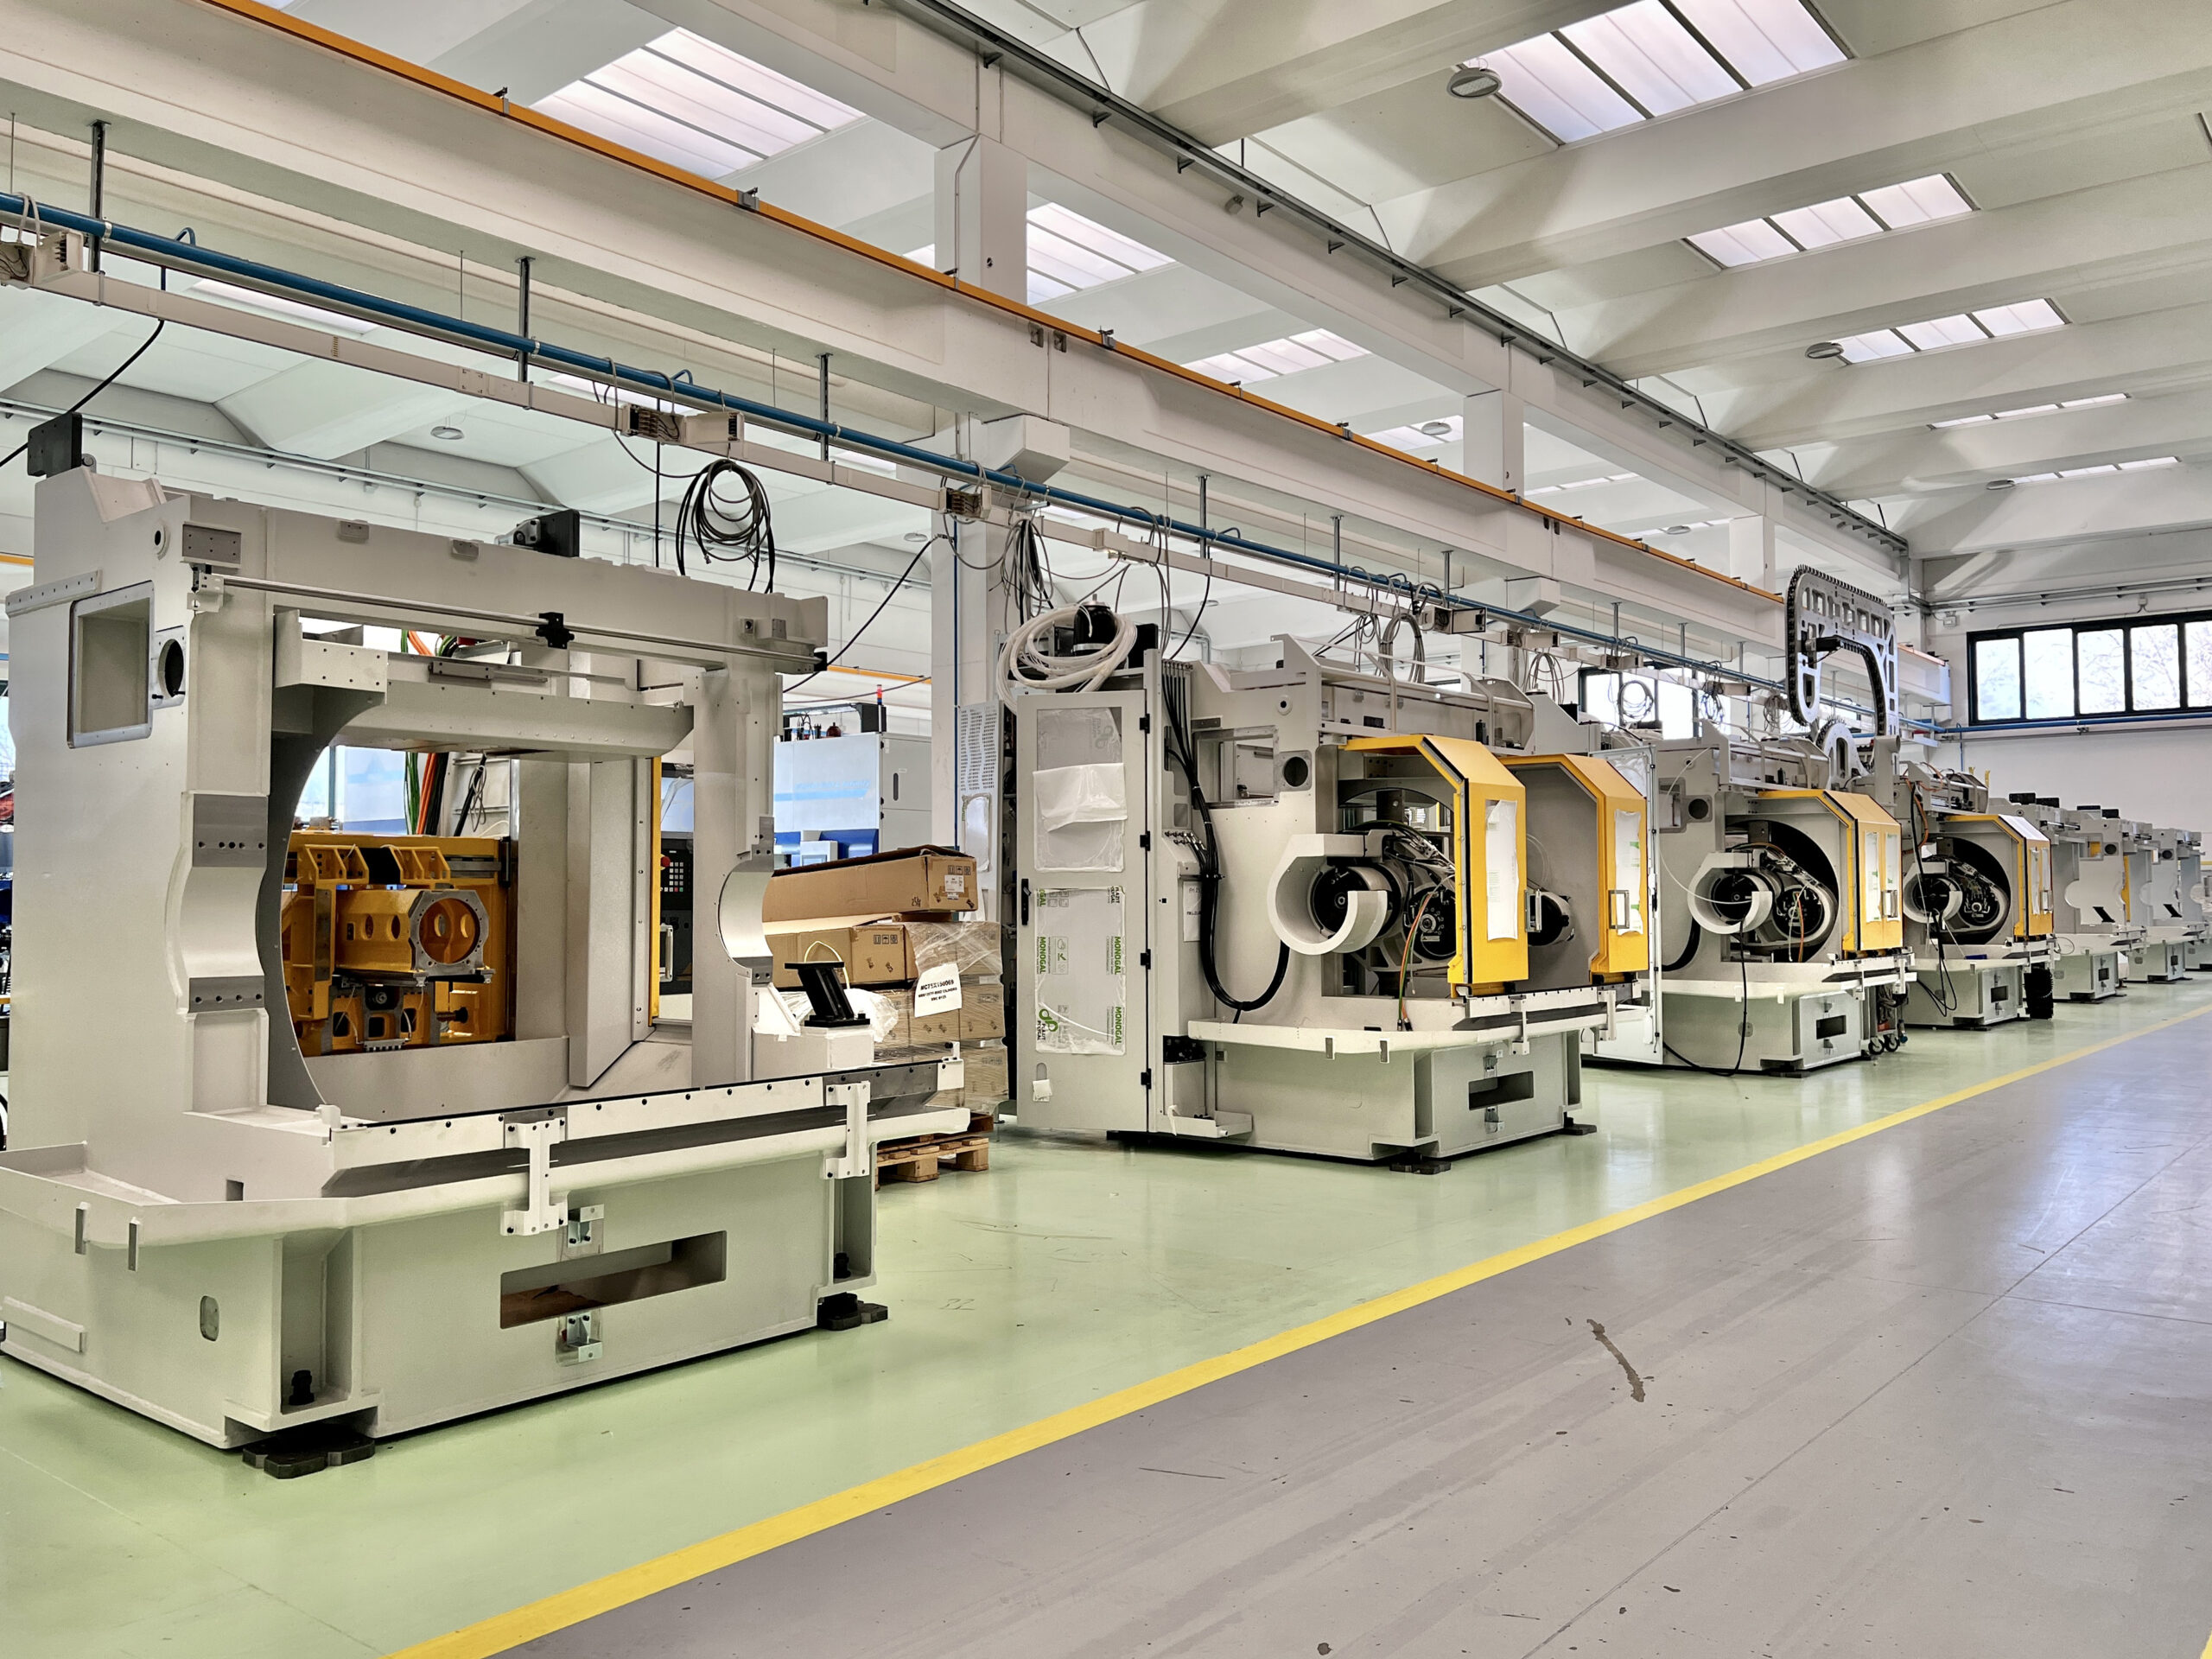 5-axis Horizontal Machining Centers, CNC mills